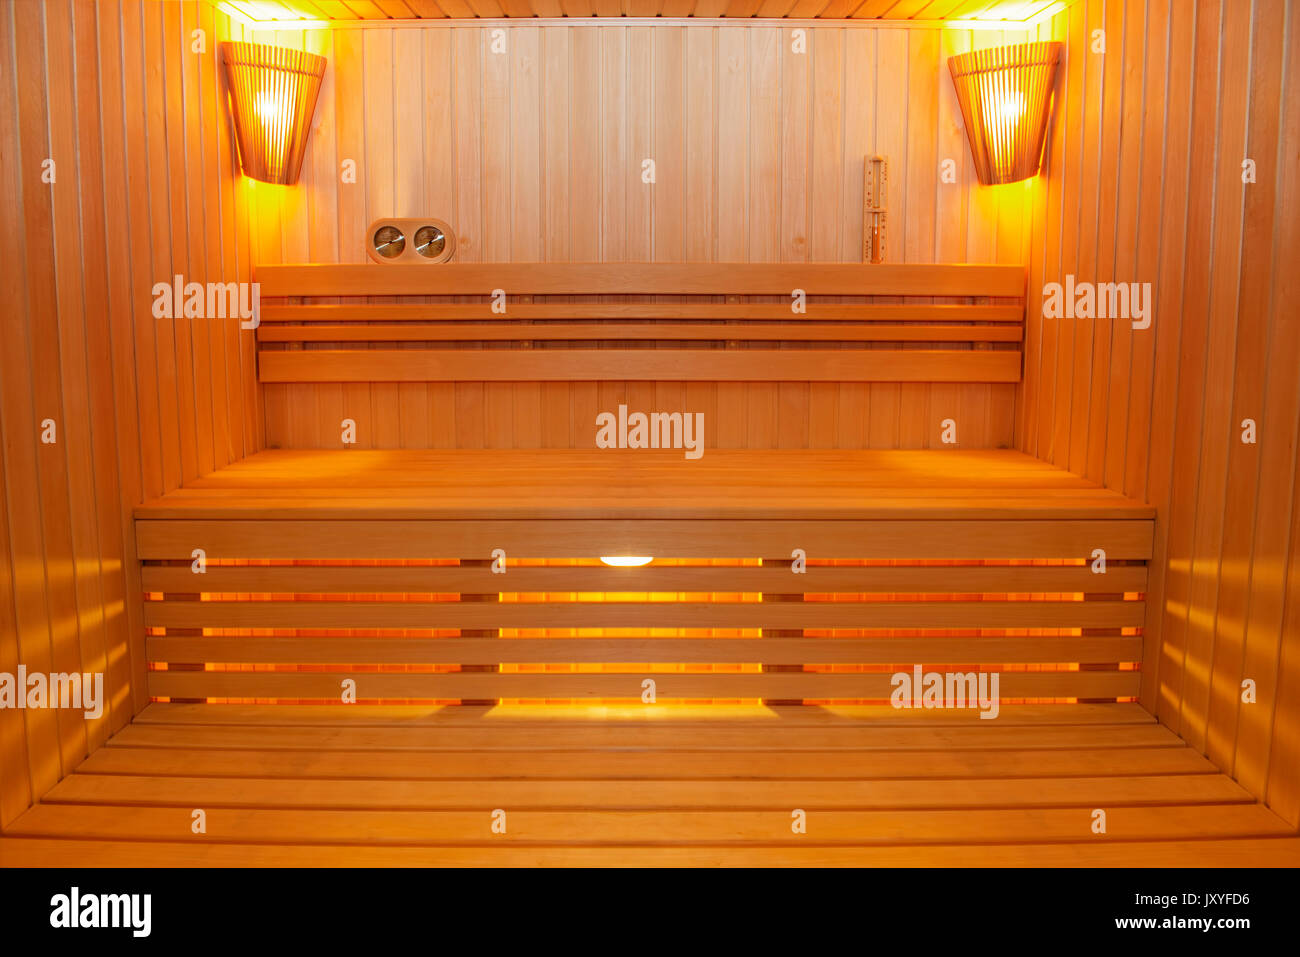 Sauna room with traditional sauna accessories Stock Photo